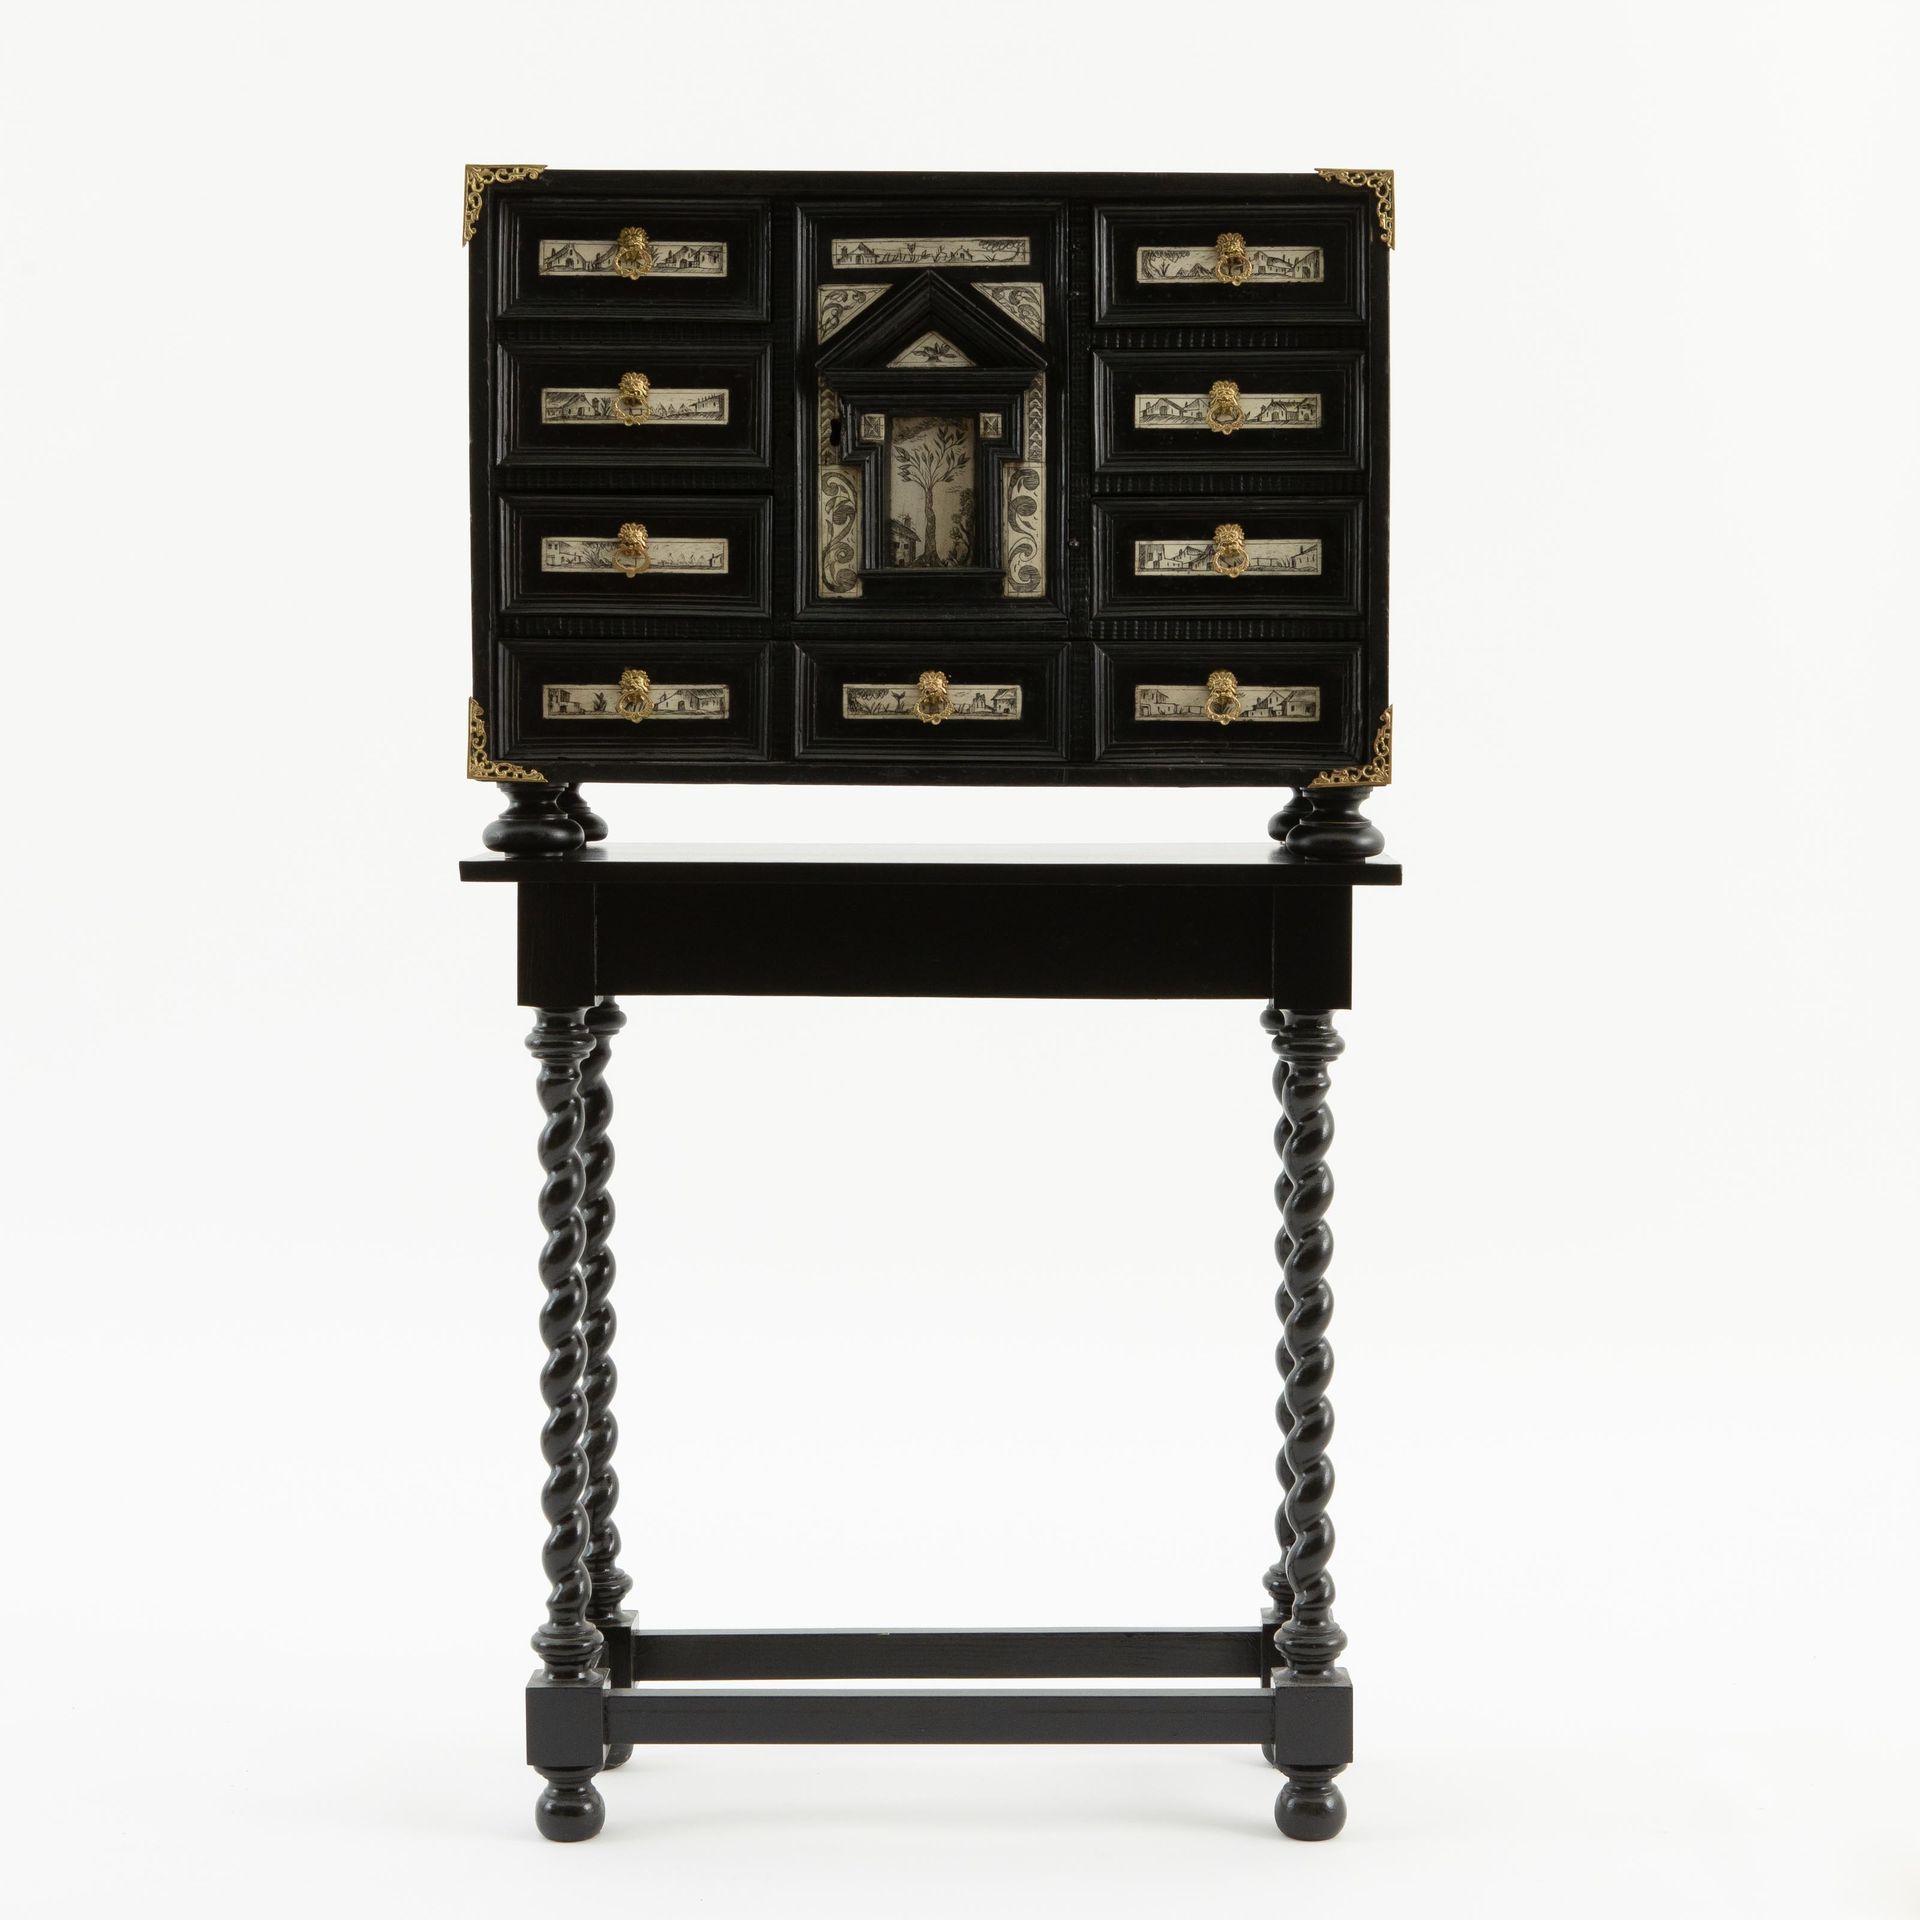 Cabinet composé. Italie. 17ème siècle. 复合艺术柜。意大利，17世纪。

发黑的木头，骨头，镀金的配件，用橡胶模子完成。
&hellip;